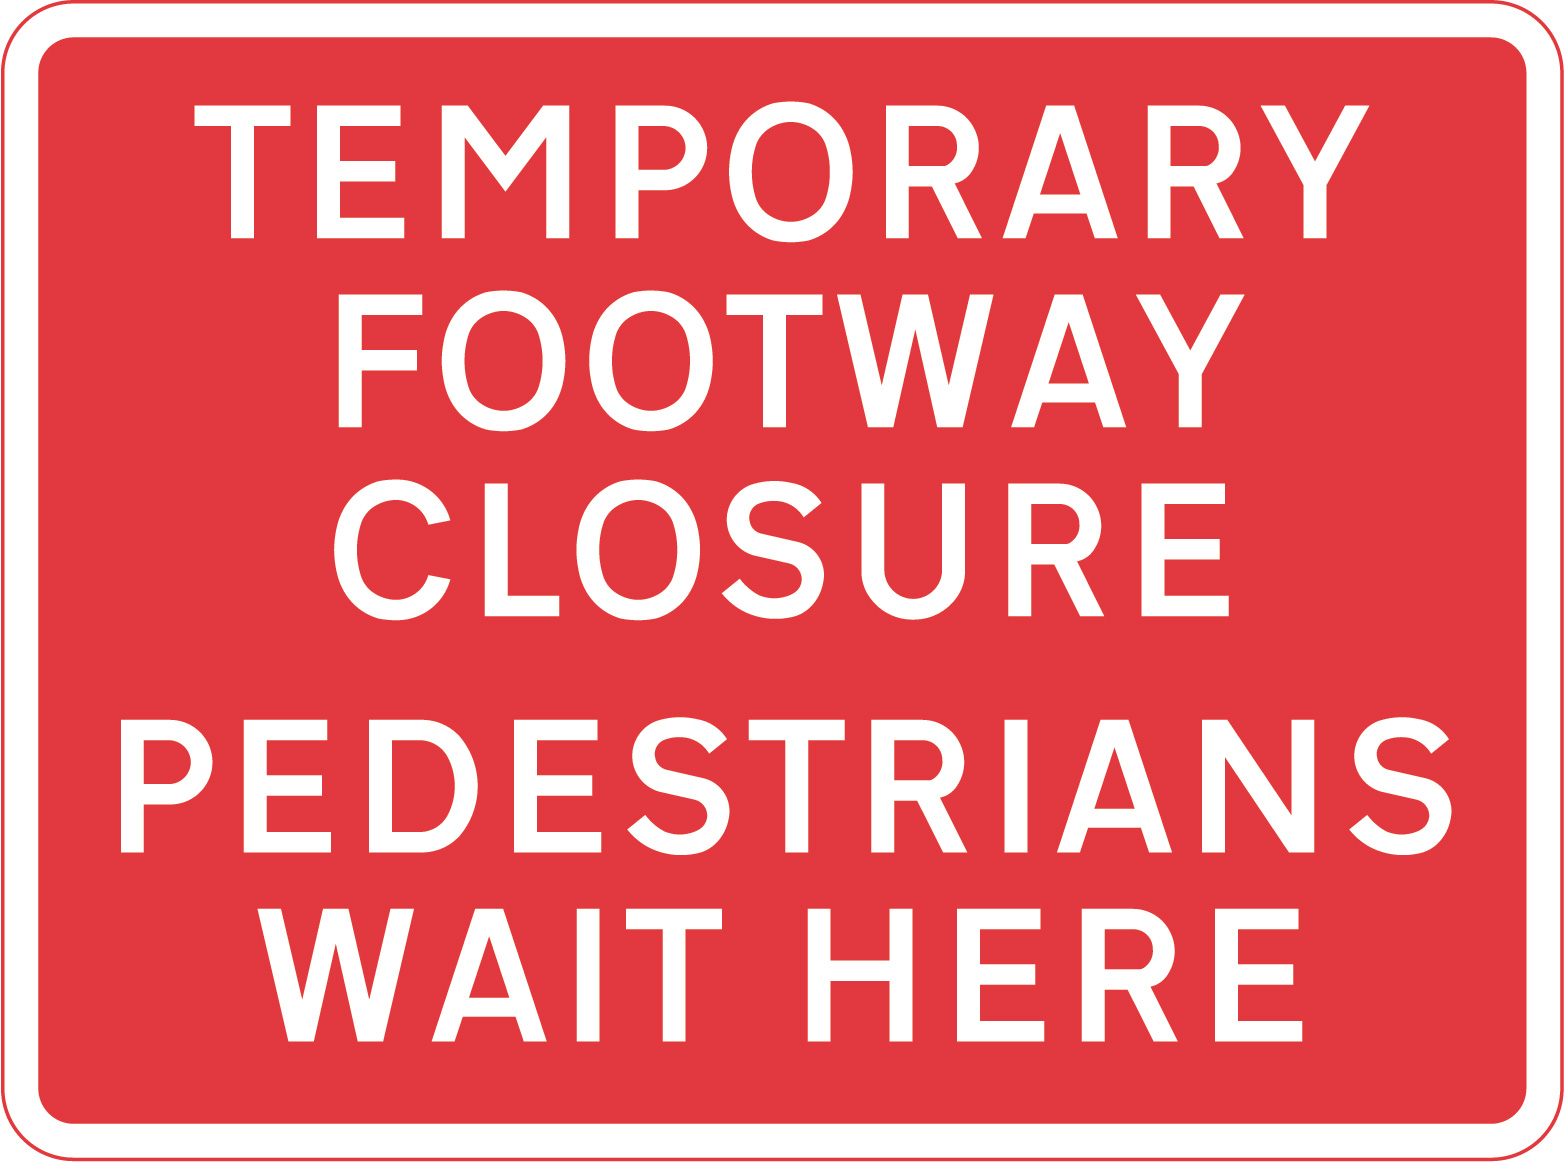 Temporary footway closure pedestrians wait here sign